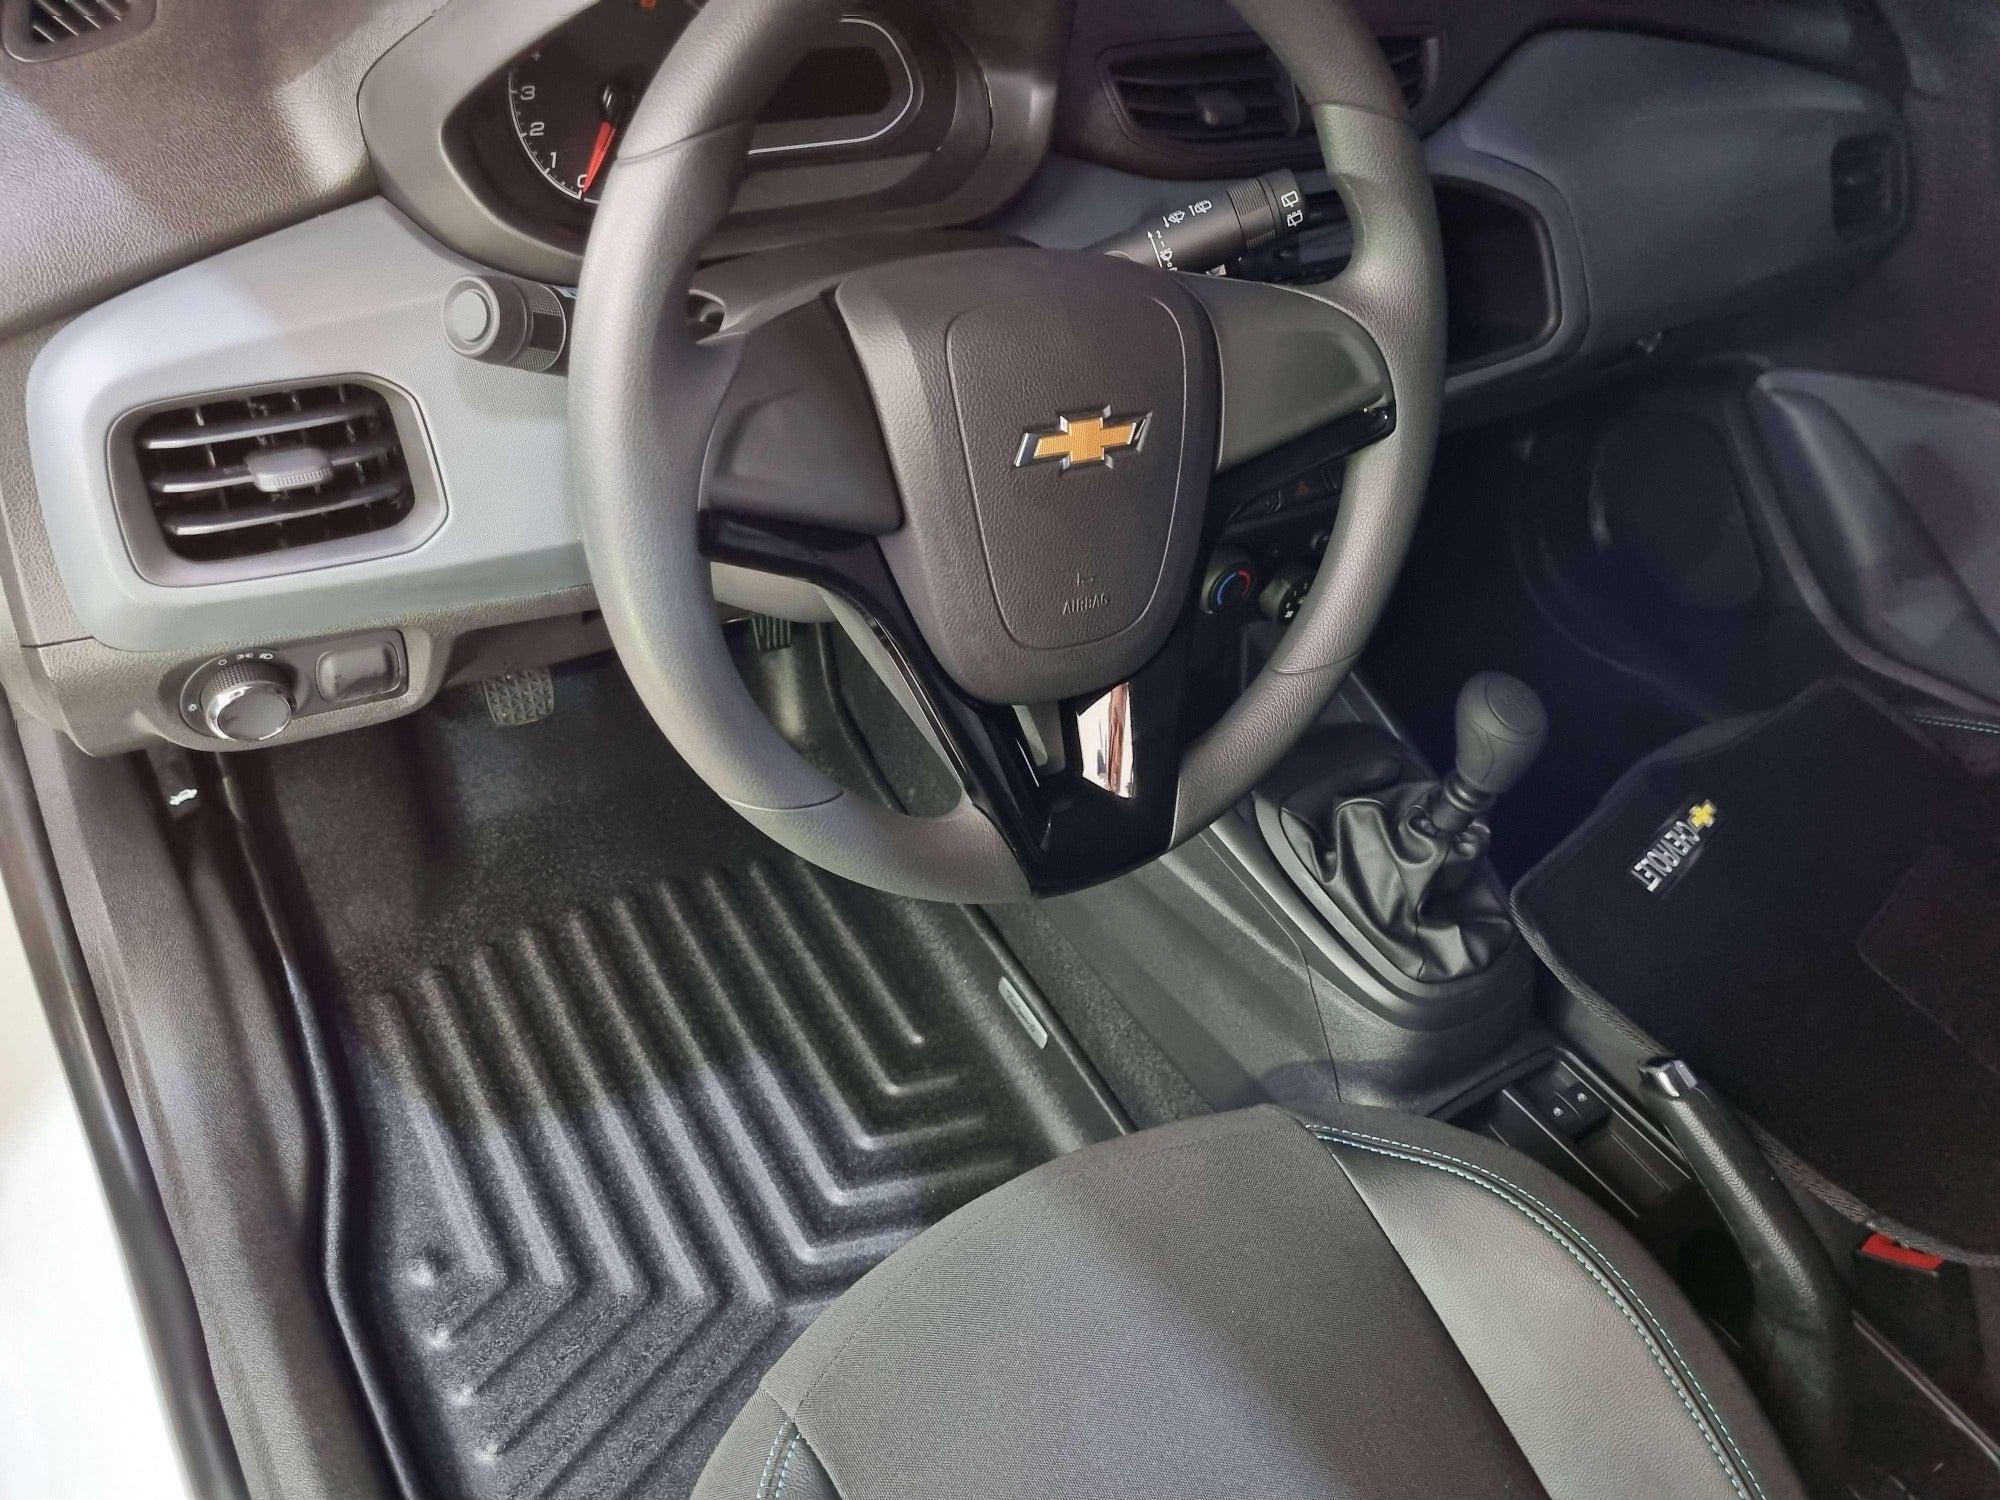 Tapetes Termoformados Mate Todoparts Chevrolet Joy Sedan - FOXCOL Colombia